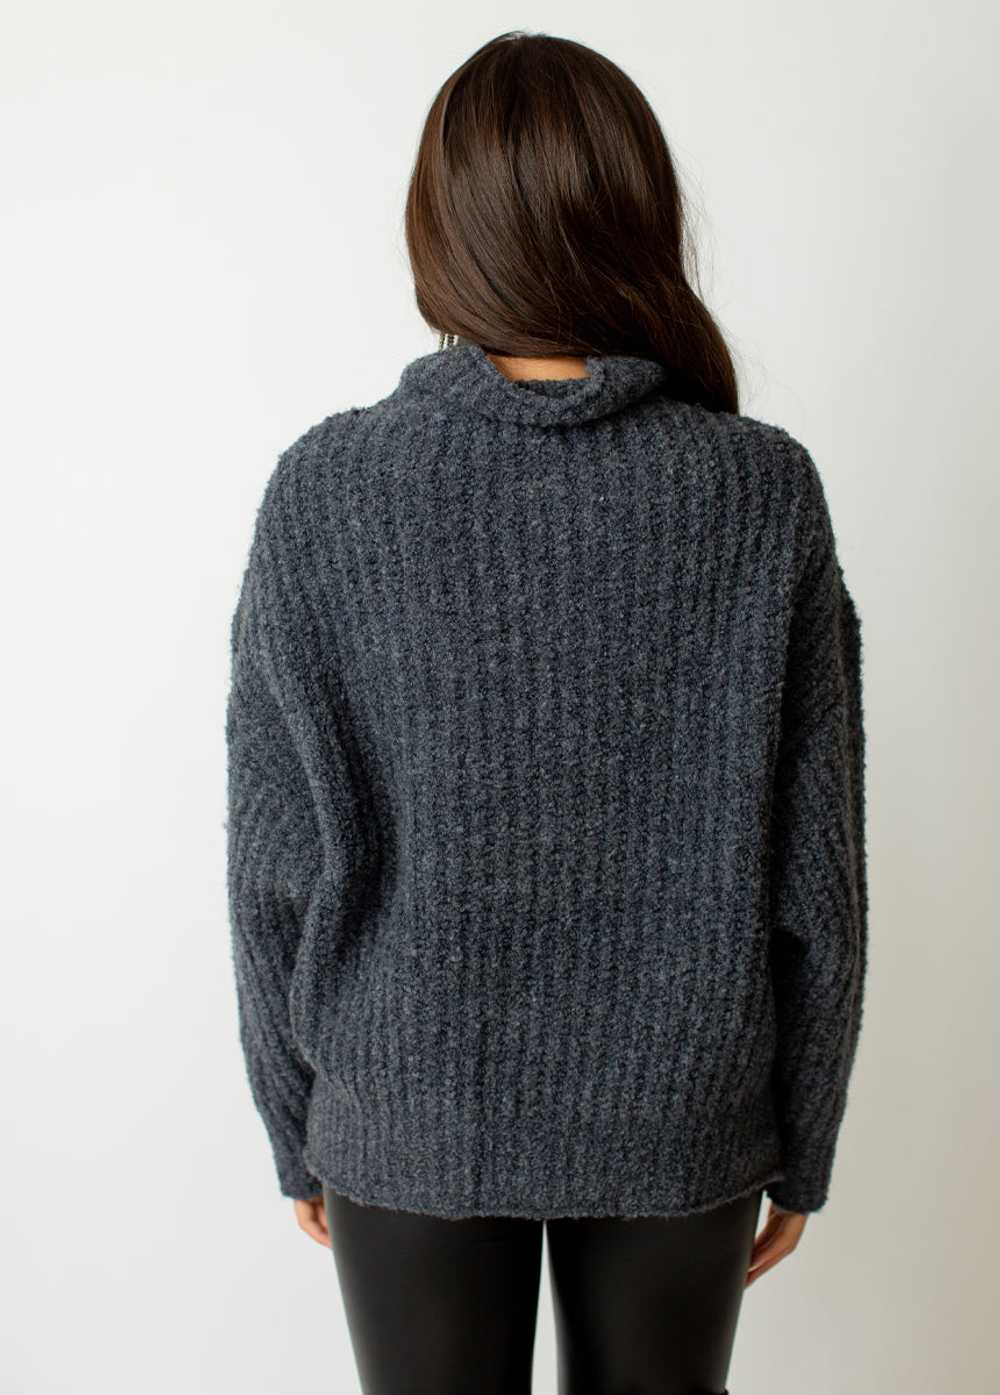 Joyfolie Kenzie Sweater in Heather Slate - image 4